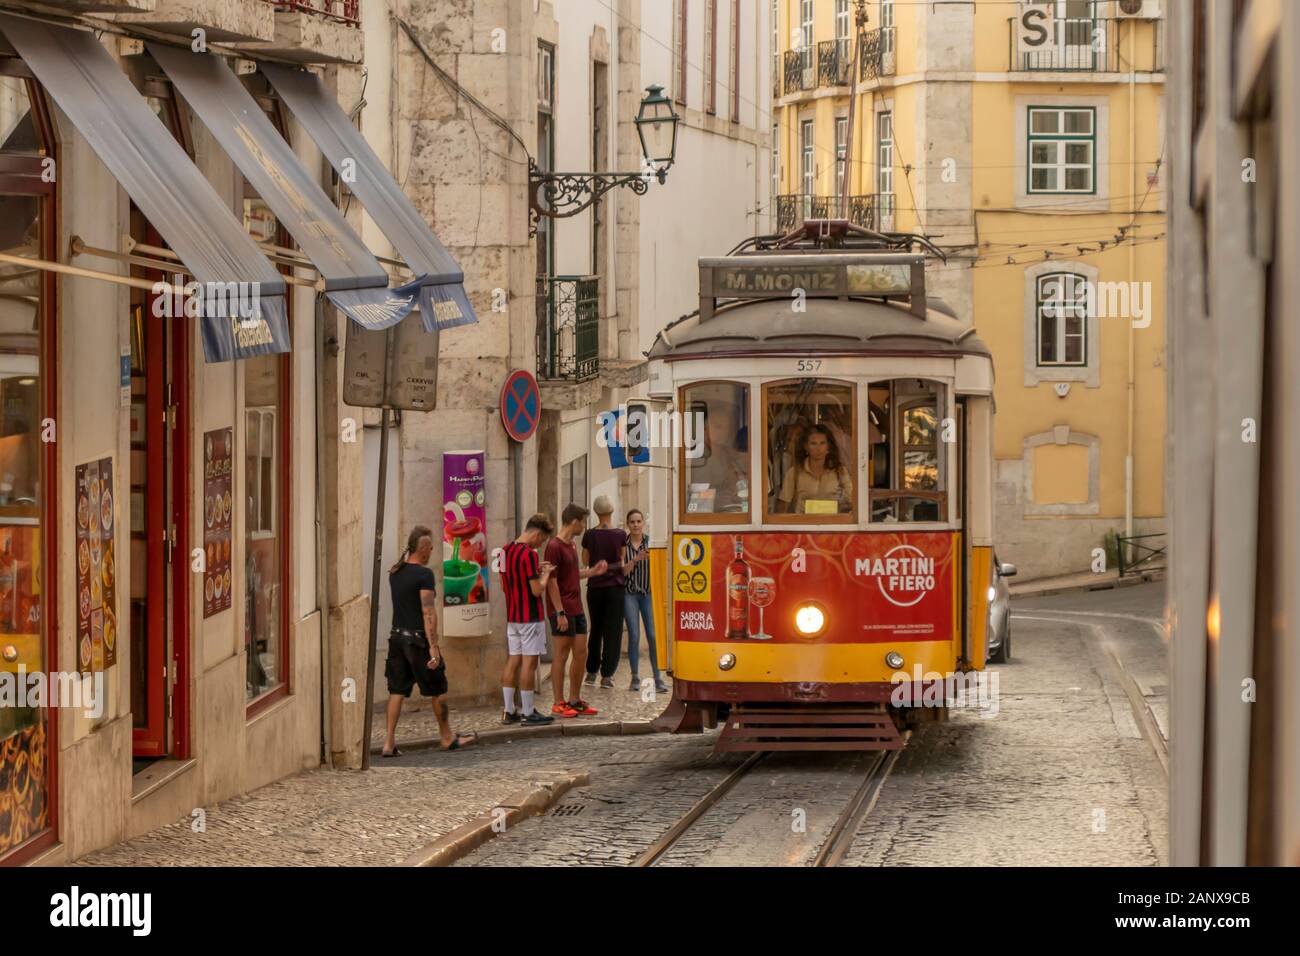 Lisbon Portugal - July 22, 2019: Passengers boarding the Number 28 tram to Martim Moniz in Lisbon City Centre, Portugal. Stock Photo